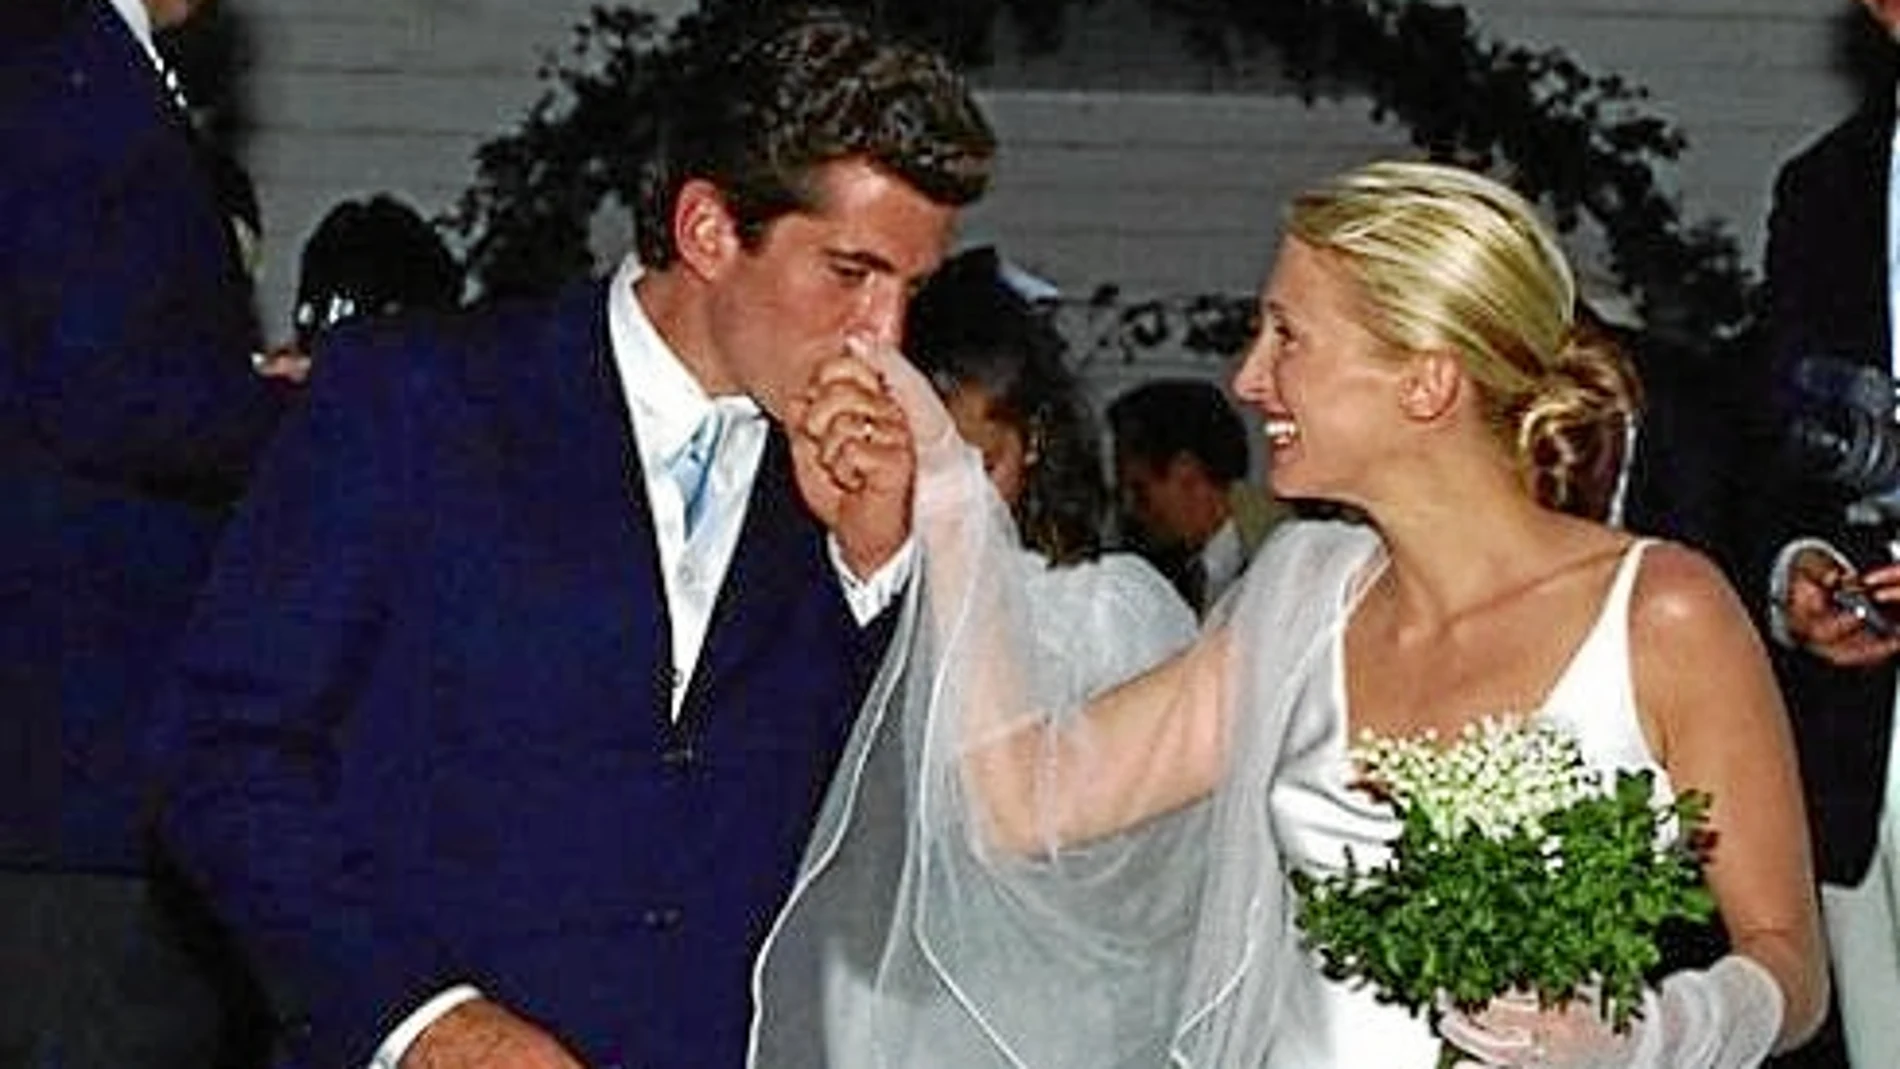 El matrimonio de John John Kennedy y Carolyn Bessete, ¿un fiasco?